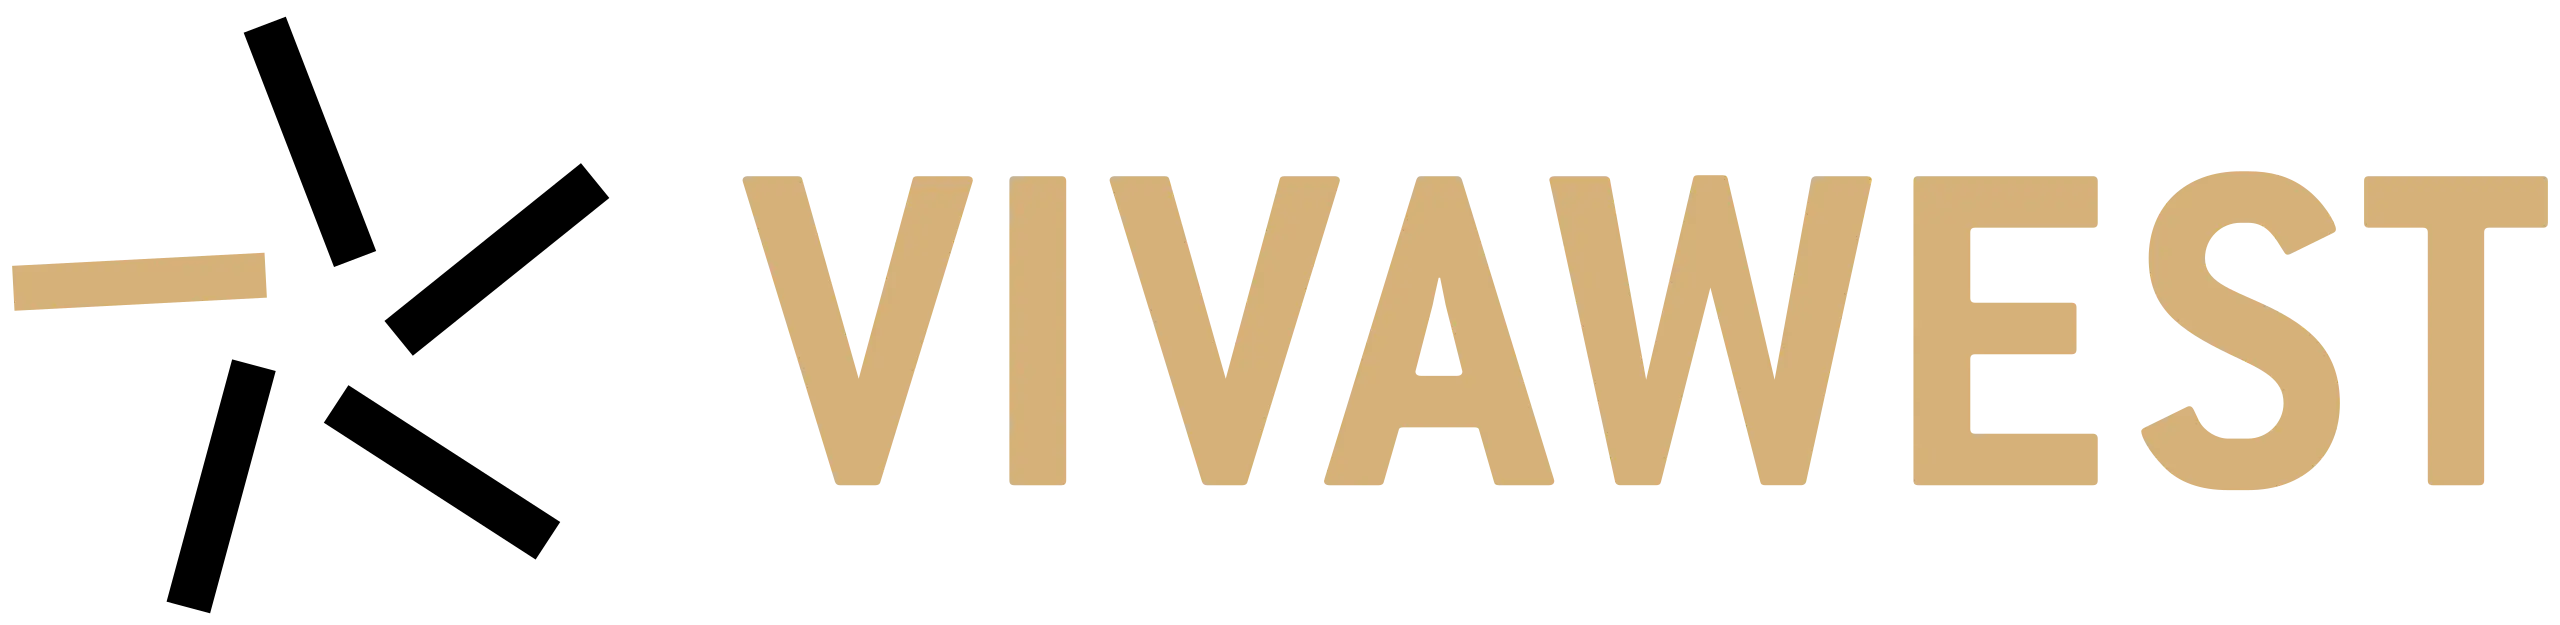 Vivawest Logo